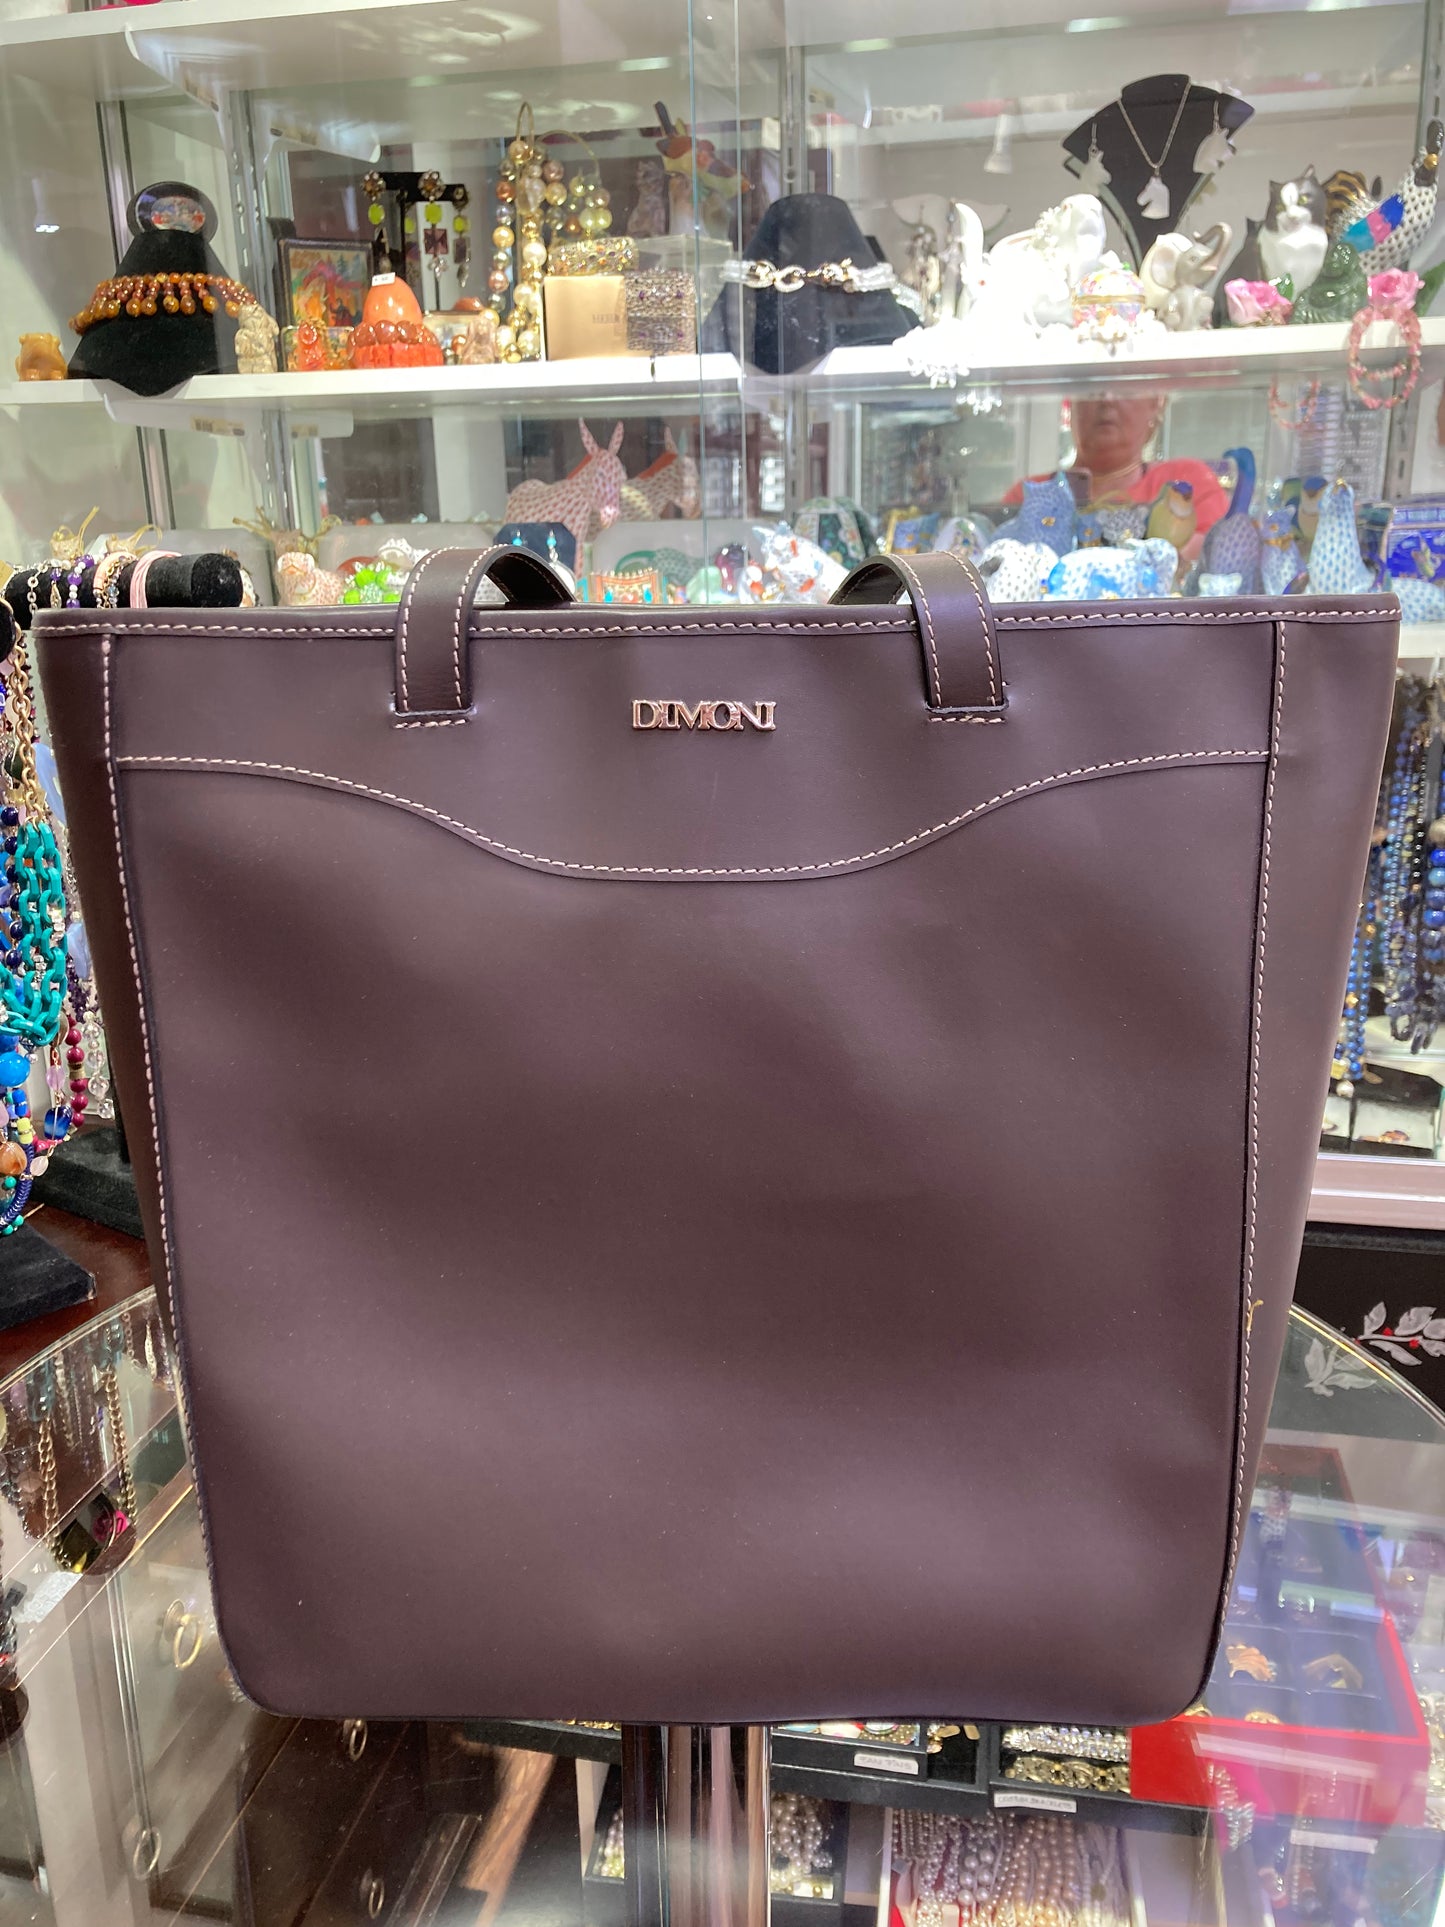 Dimoni Designer Handbag leather brown color